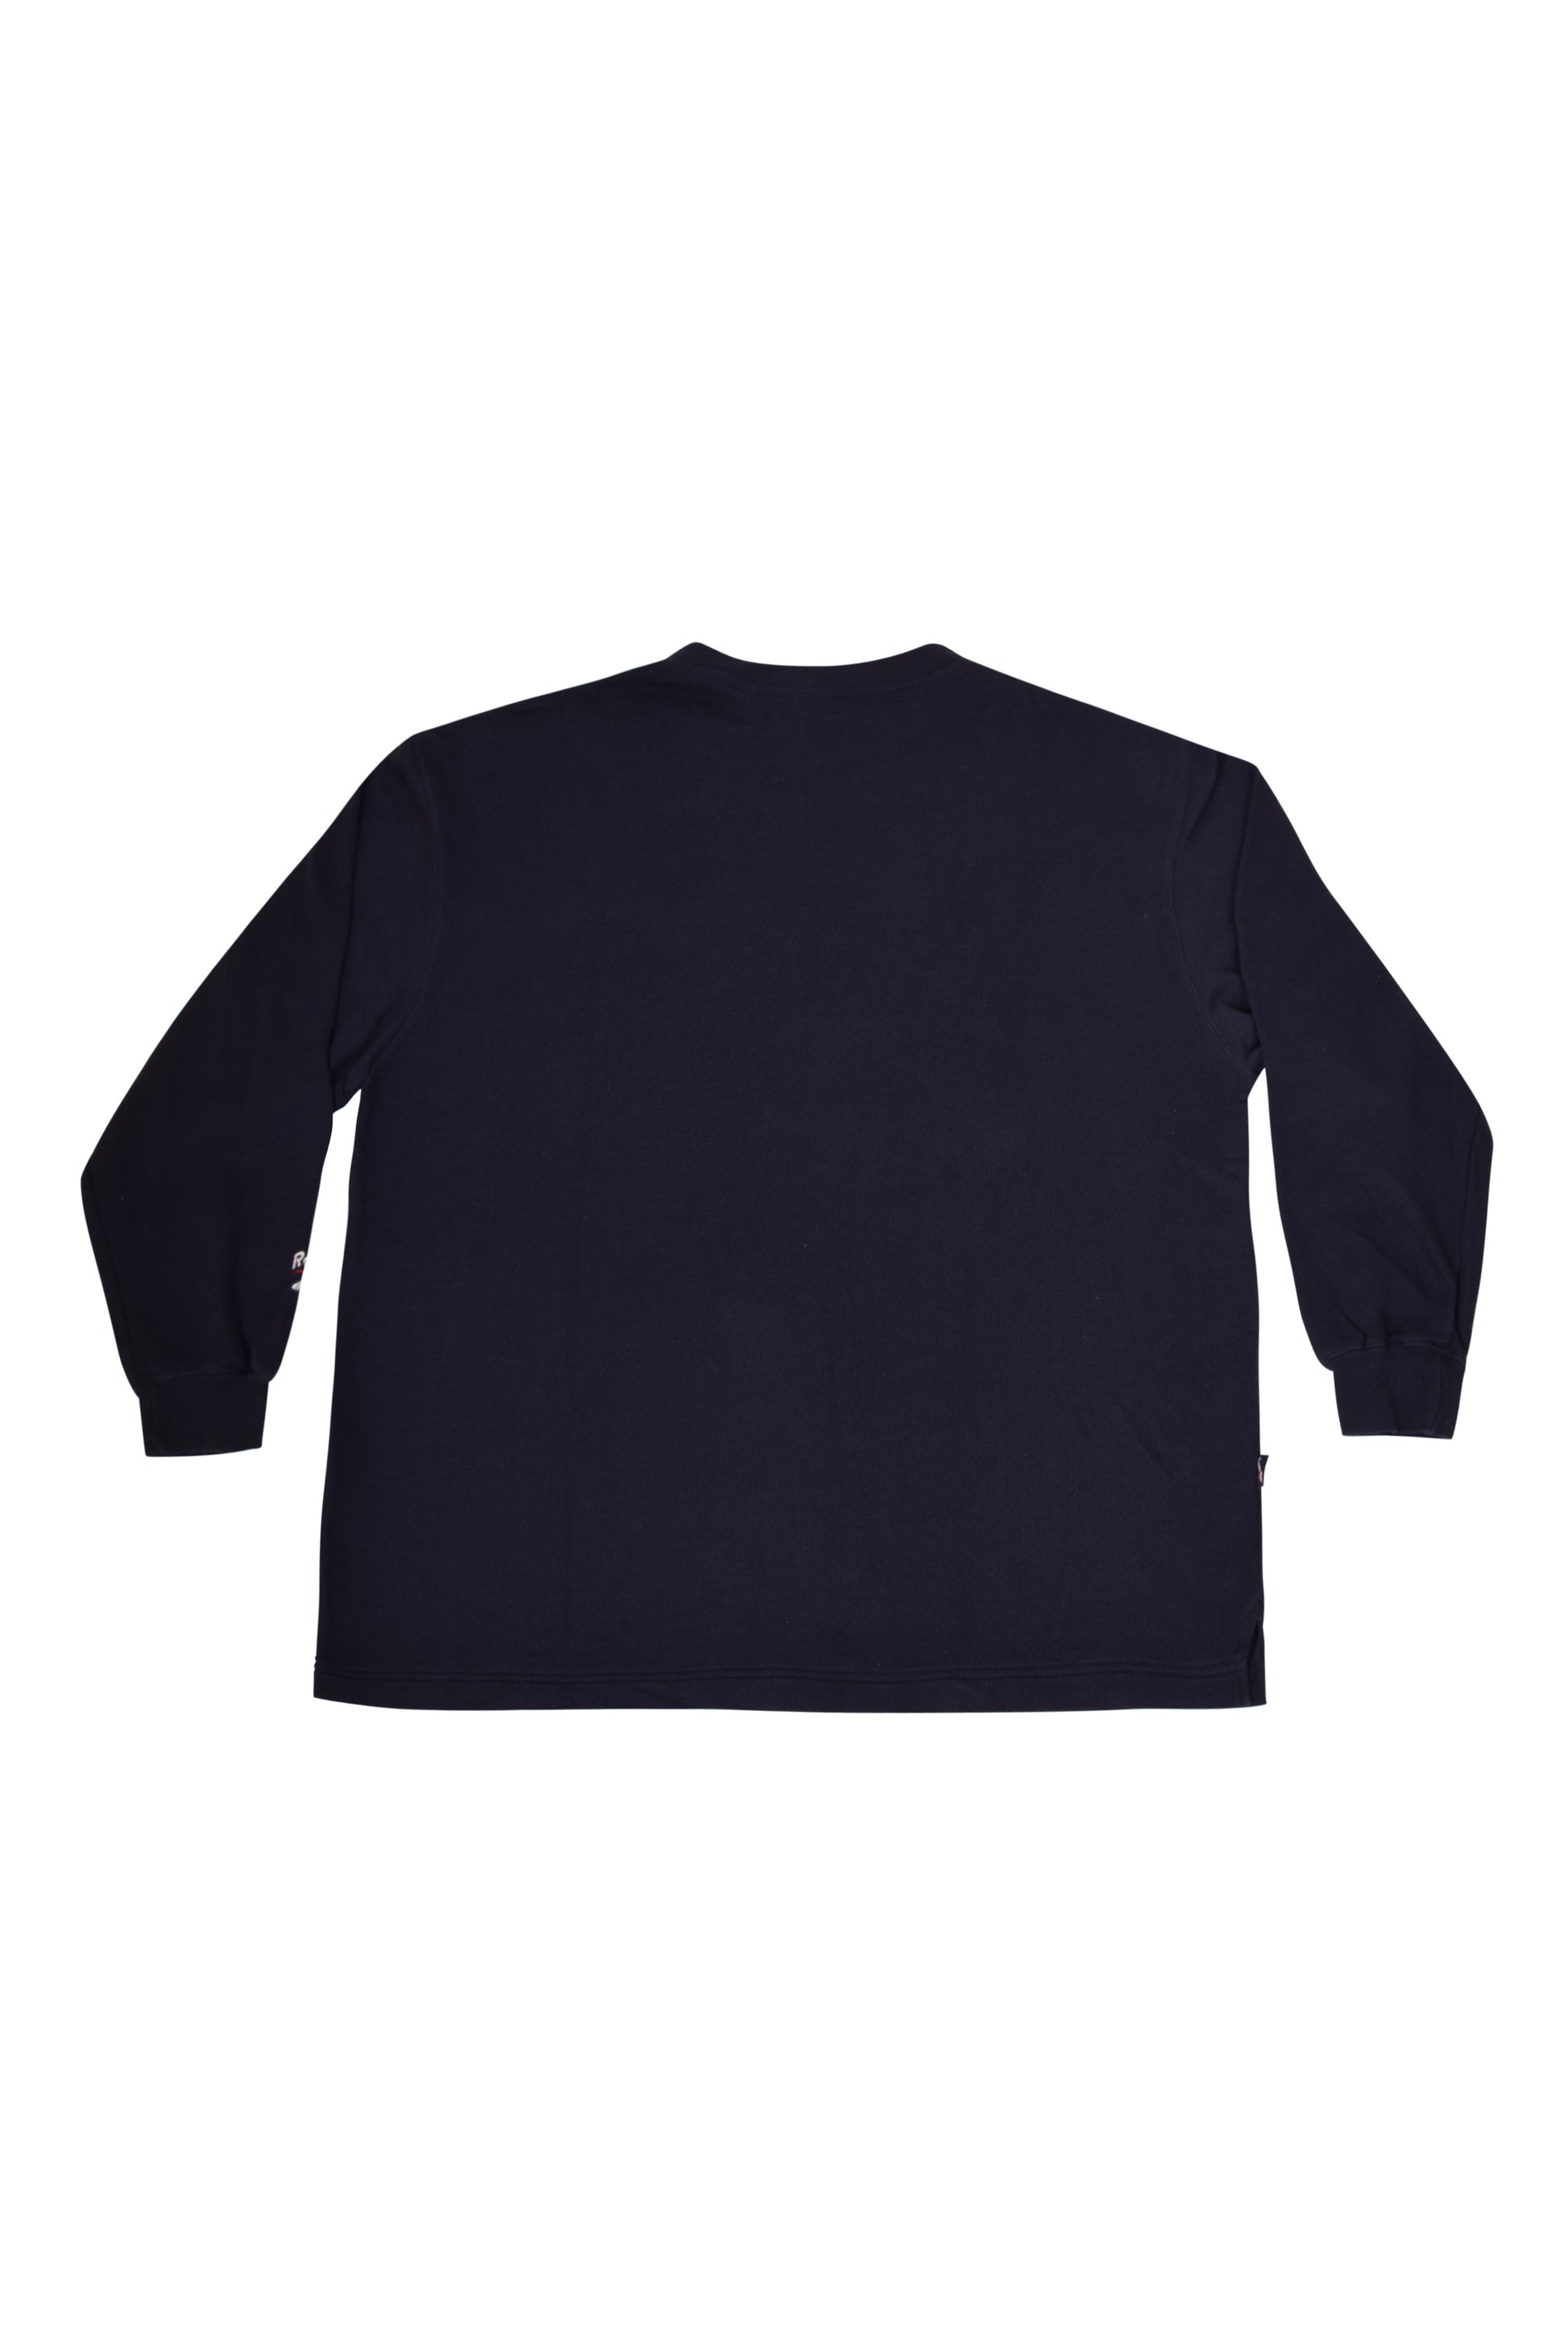 Vintage Reebok Sweatshirt 90's Navy Blue Size XL